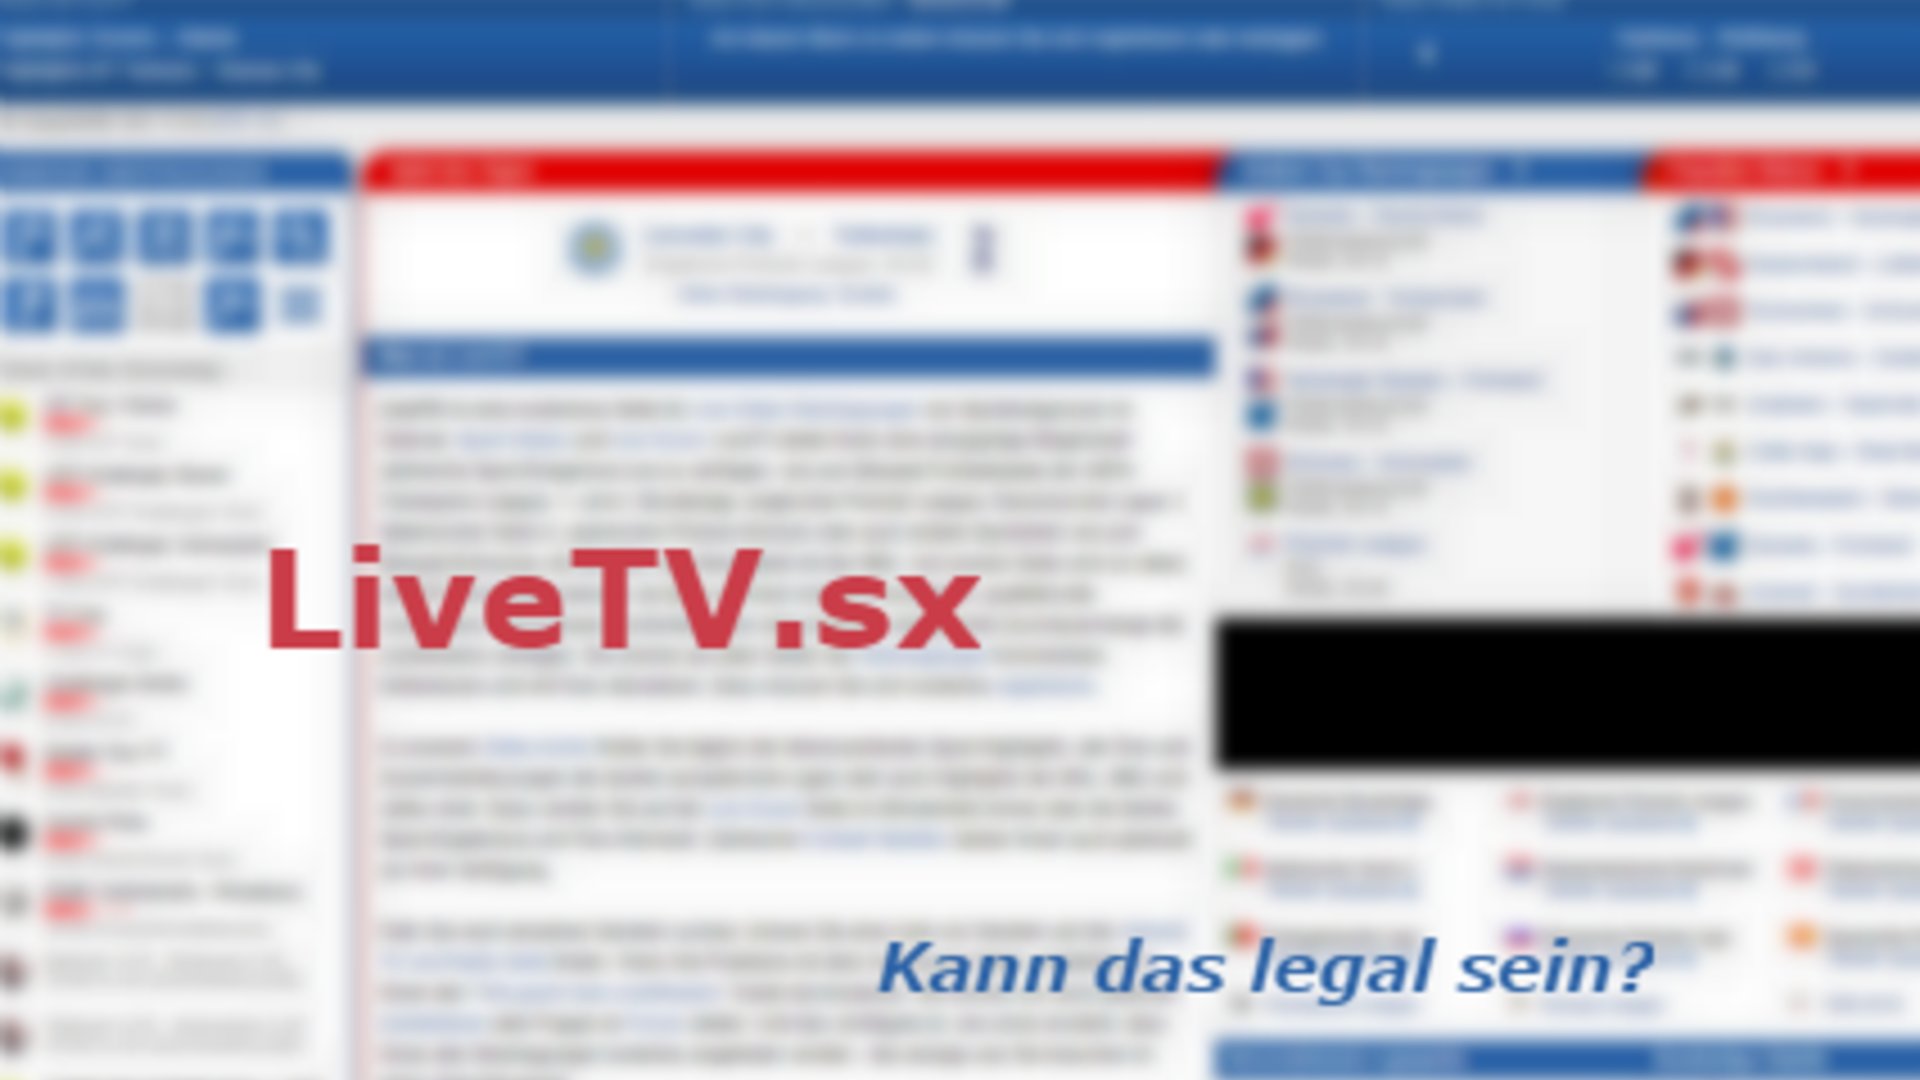 LiveTV.sx Fußball-Bundesliga and Champions League kostenlos im Stream ansehen